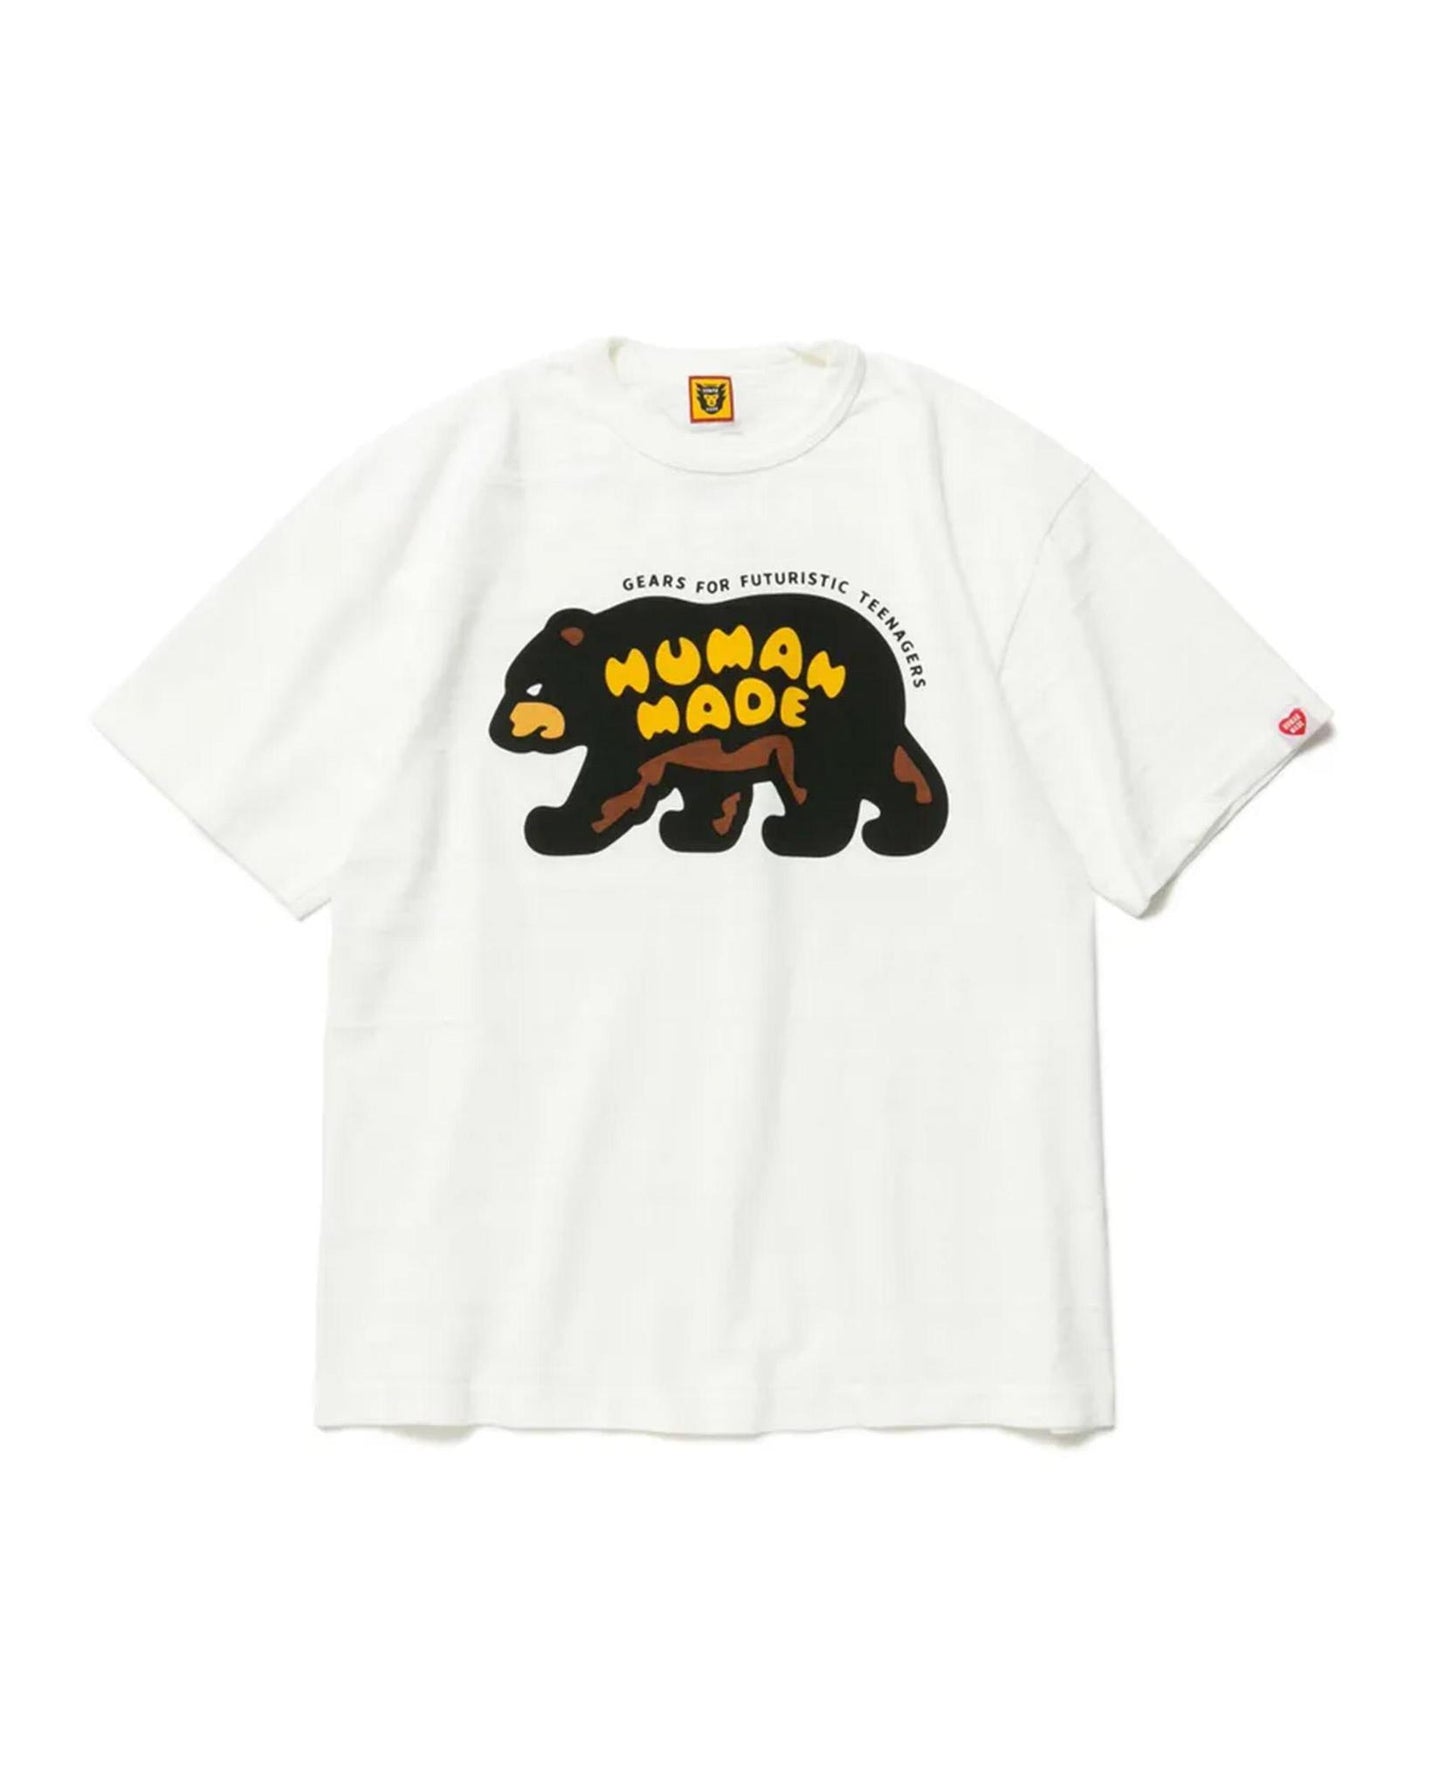 Human Made Pocket #2 Back Tiger Print T-shirt in White for Men